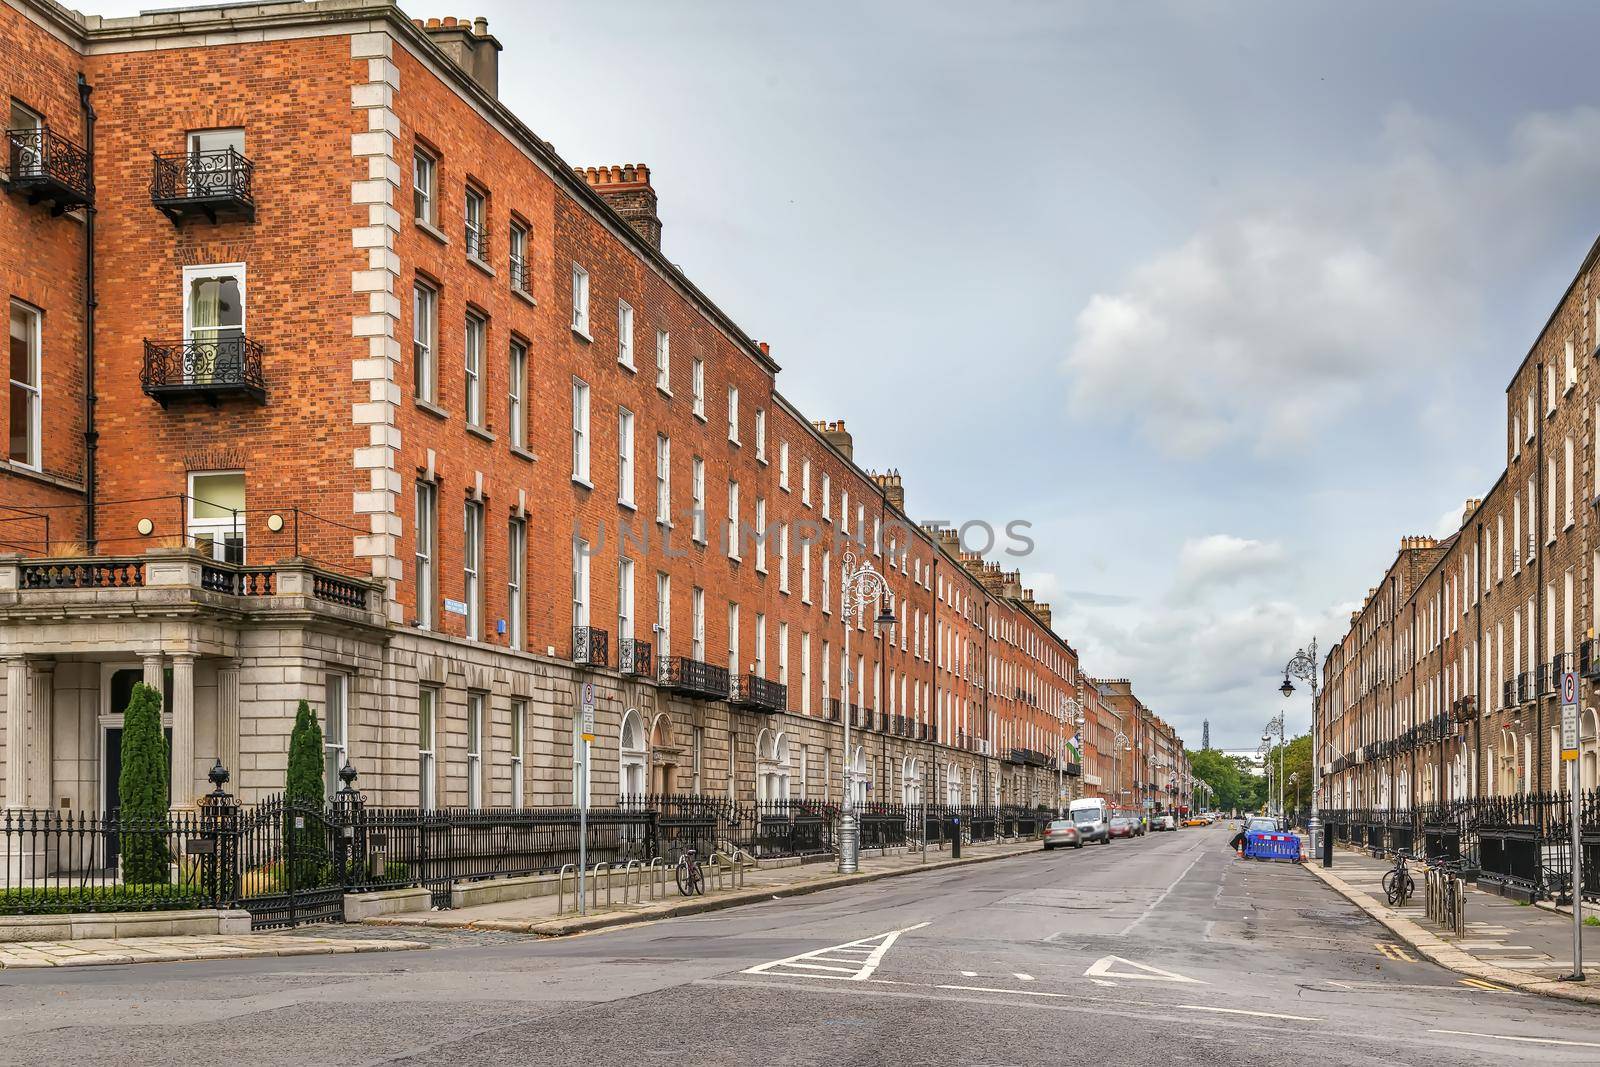 Street in Dublin, Ireland by borisb17